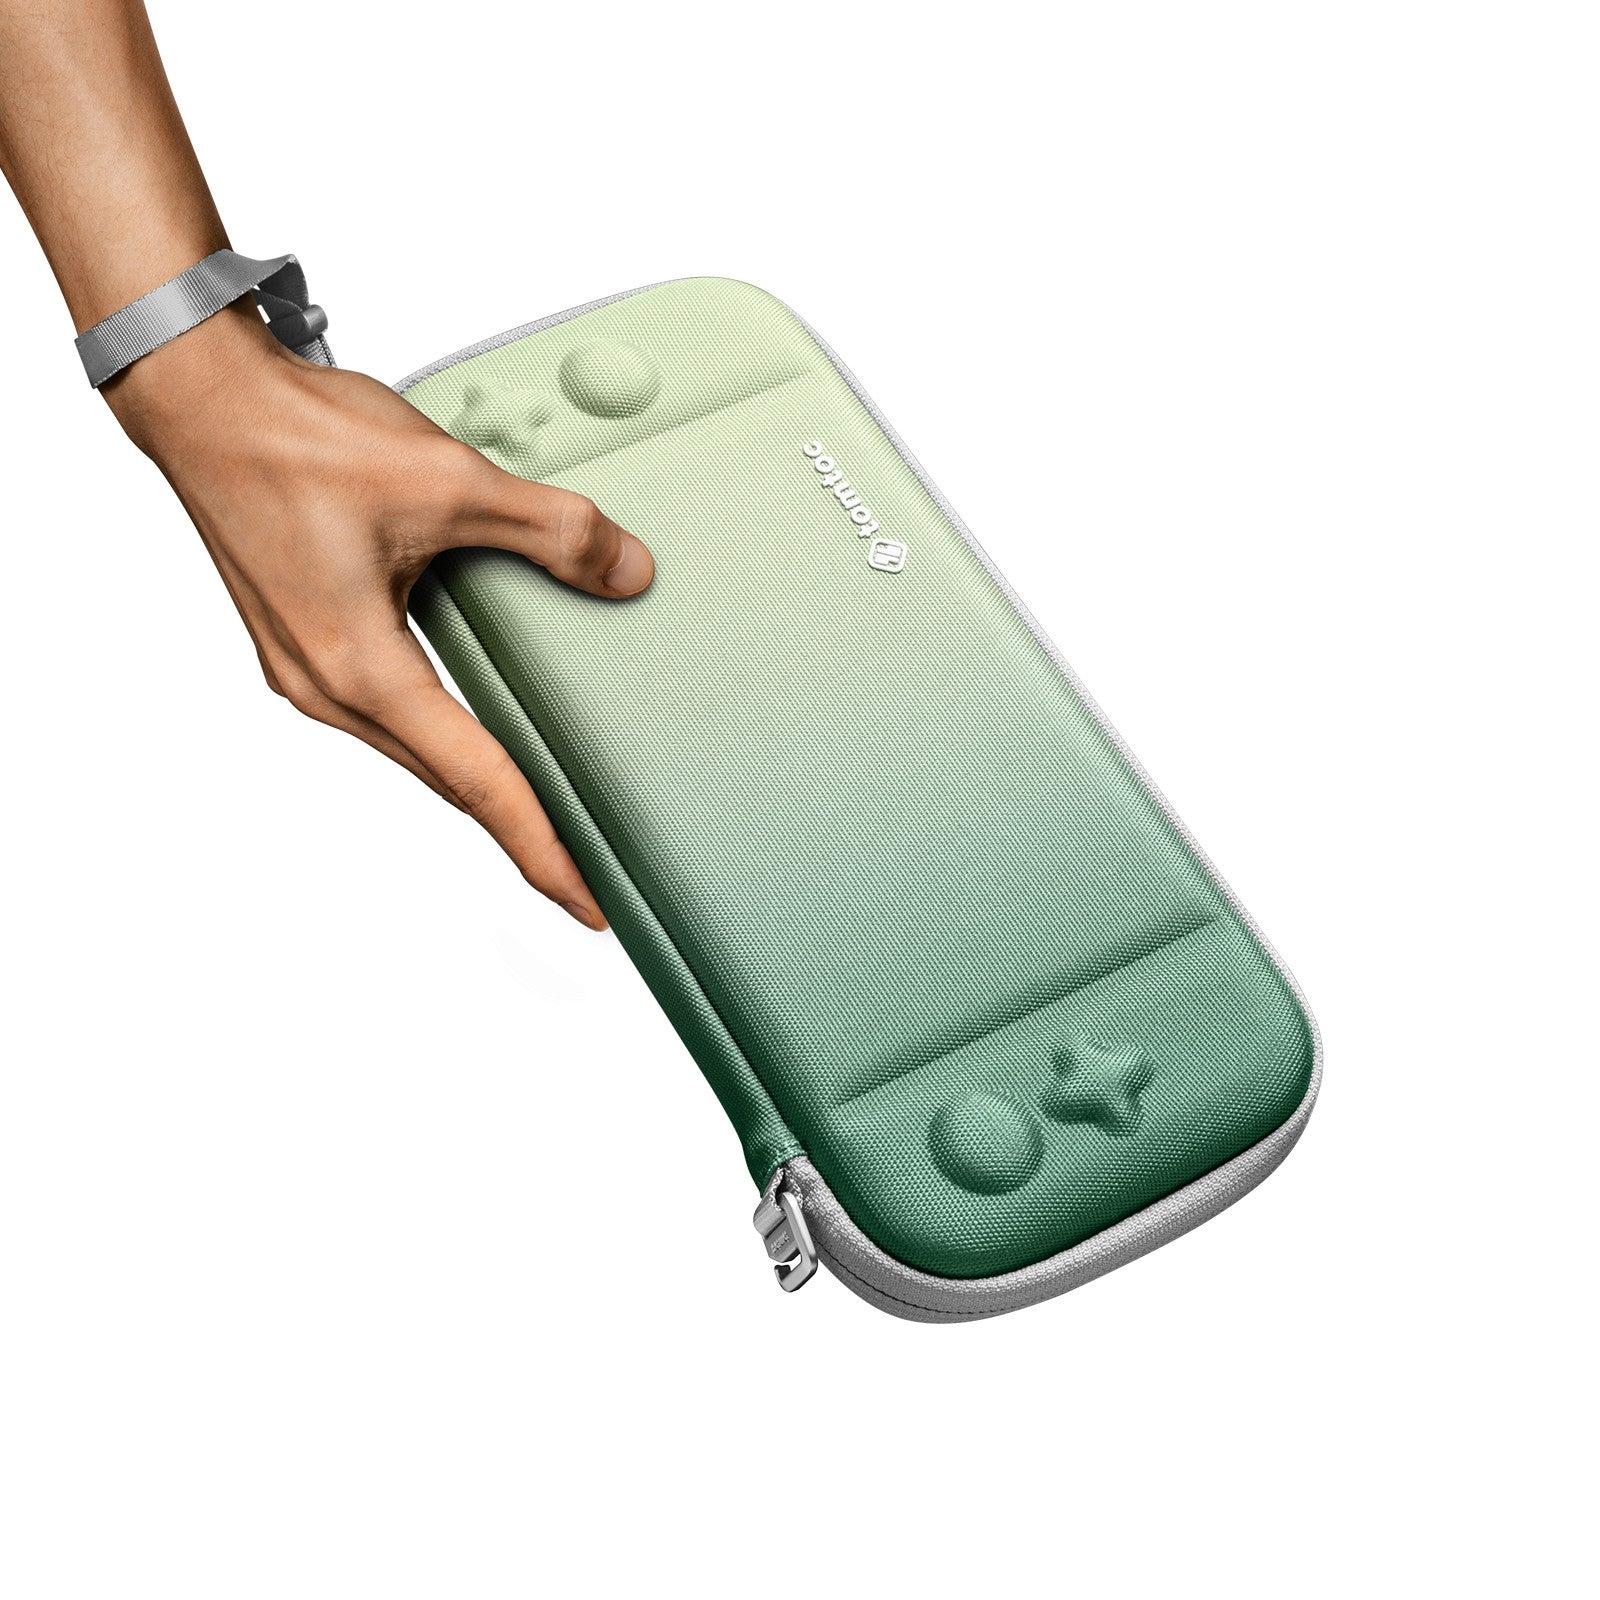 Nintendo Switch/ Oled Model Slim Case